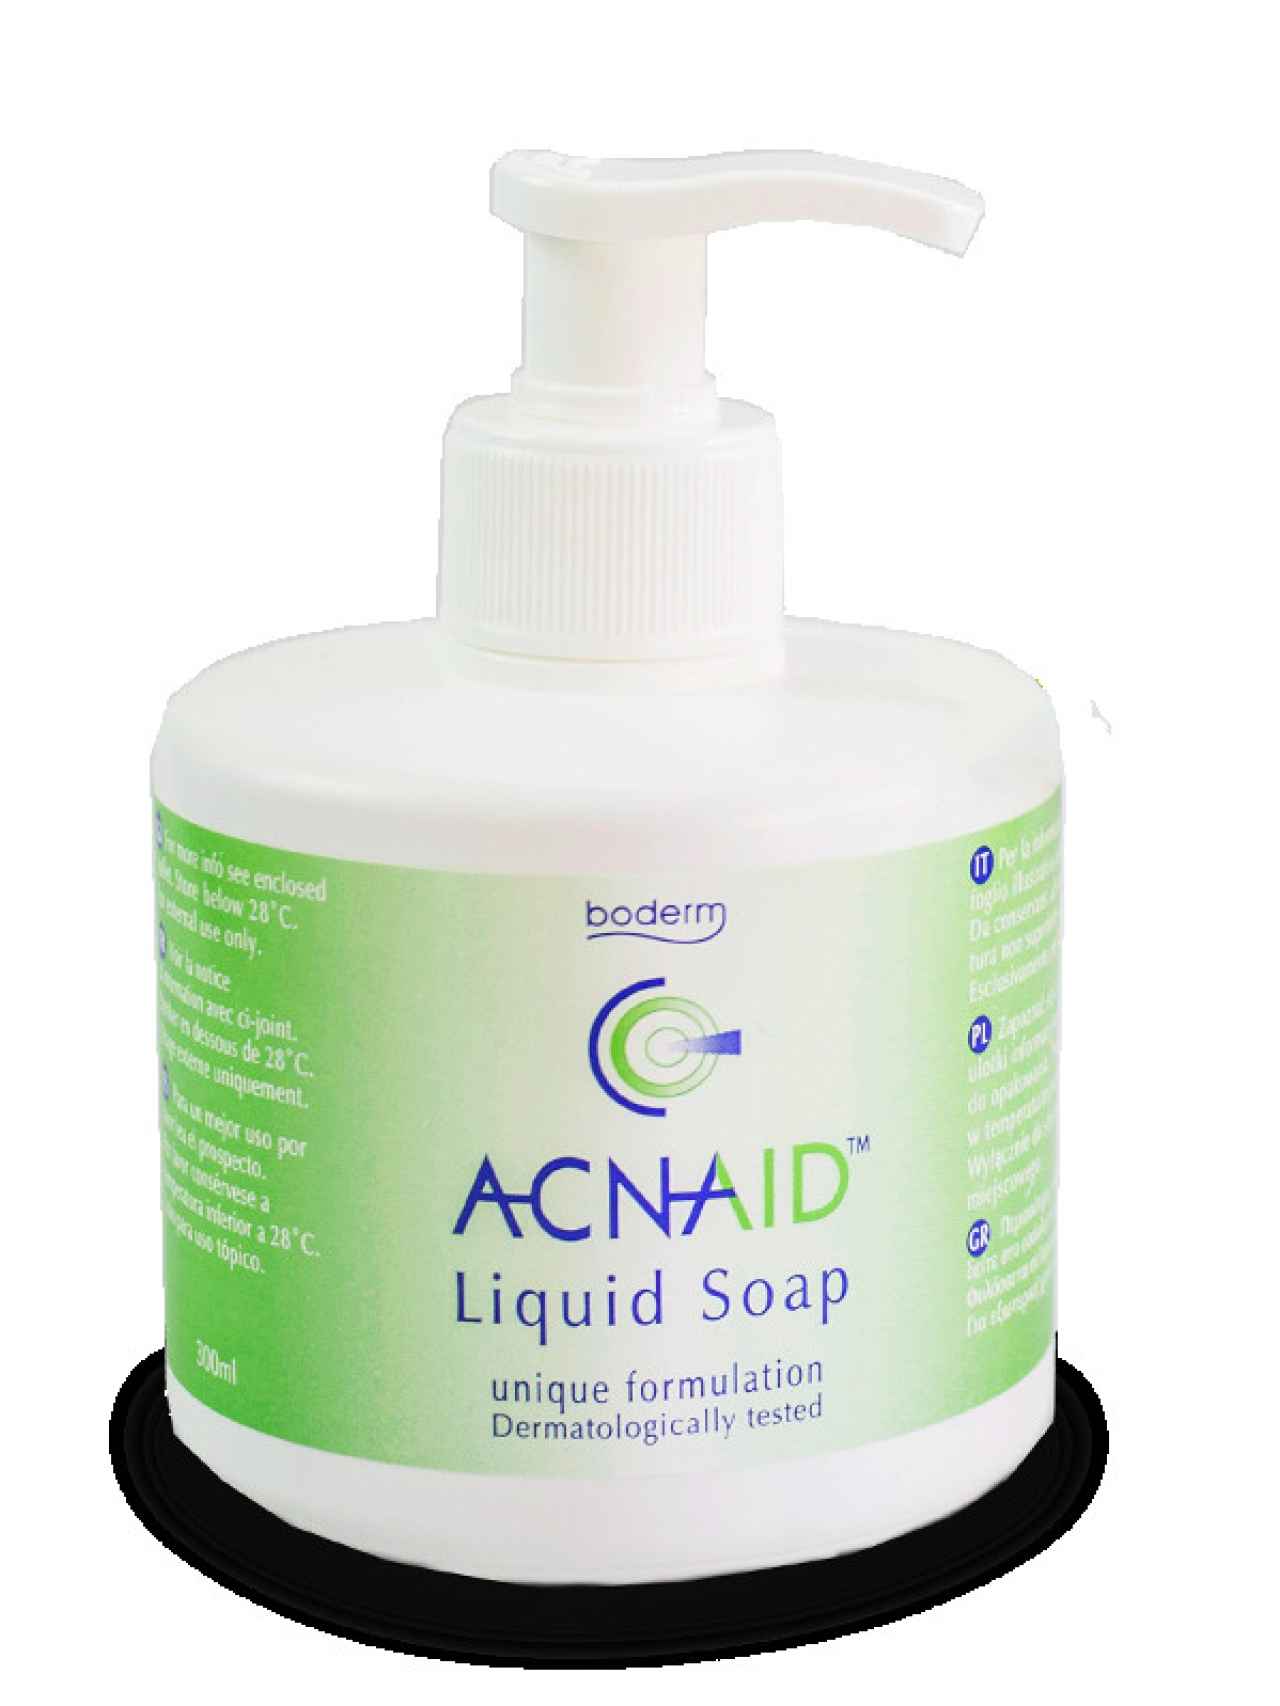 Jabón líquido Acnaid.